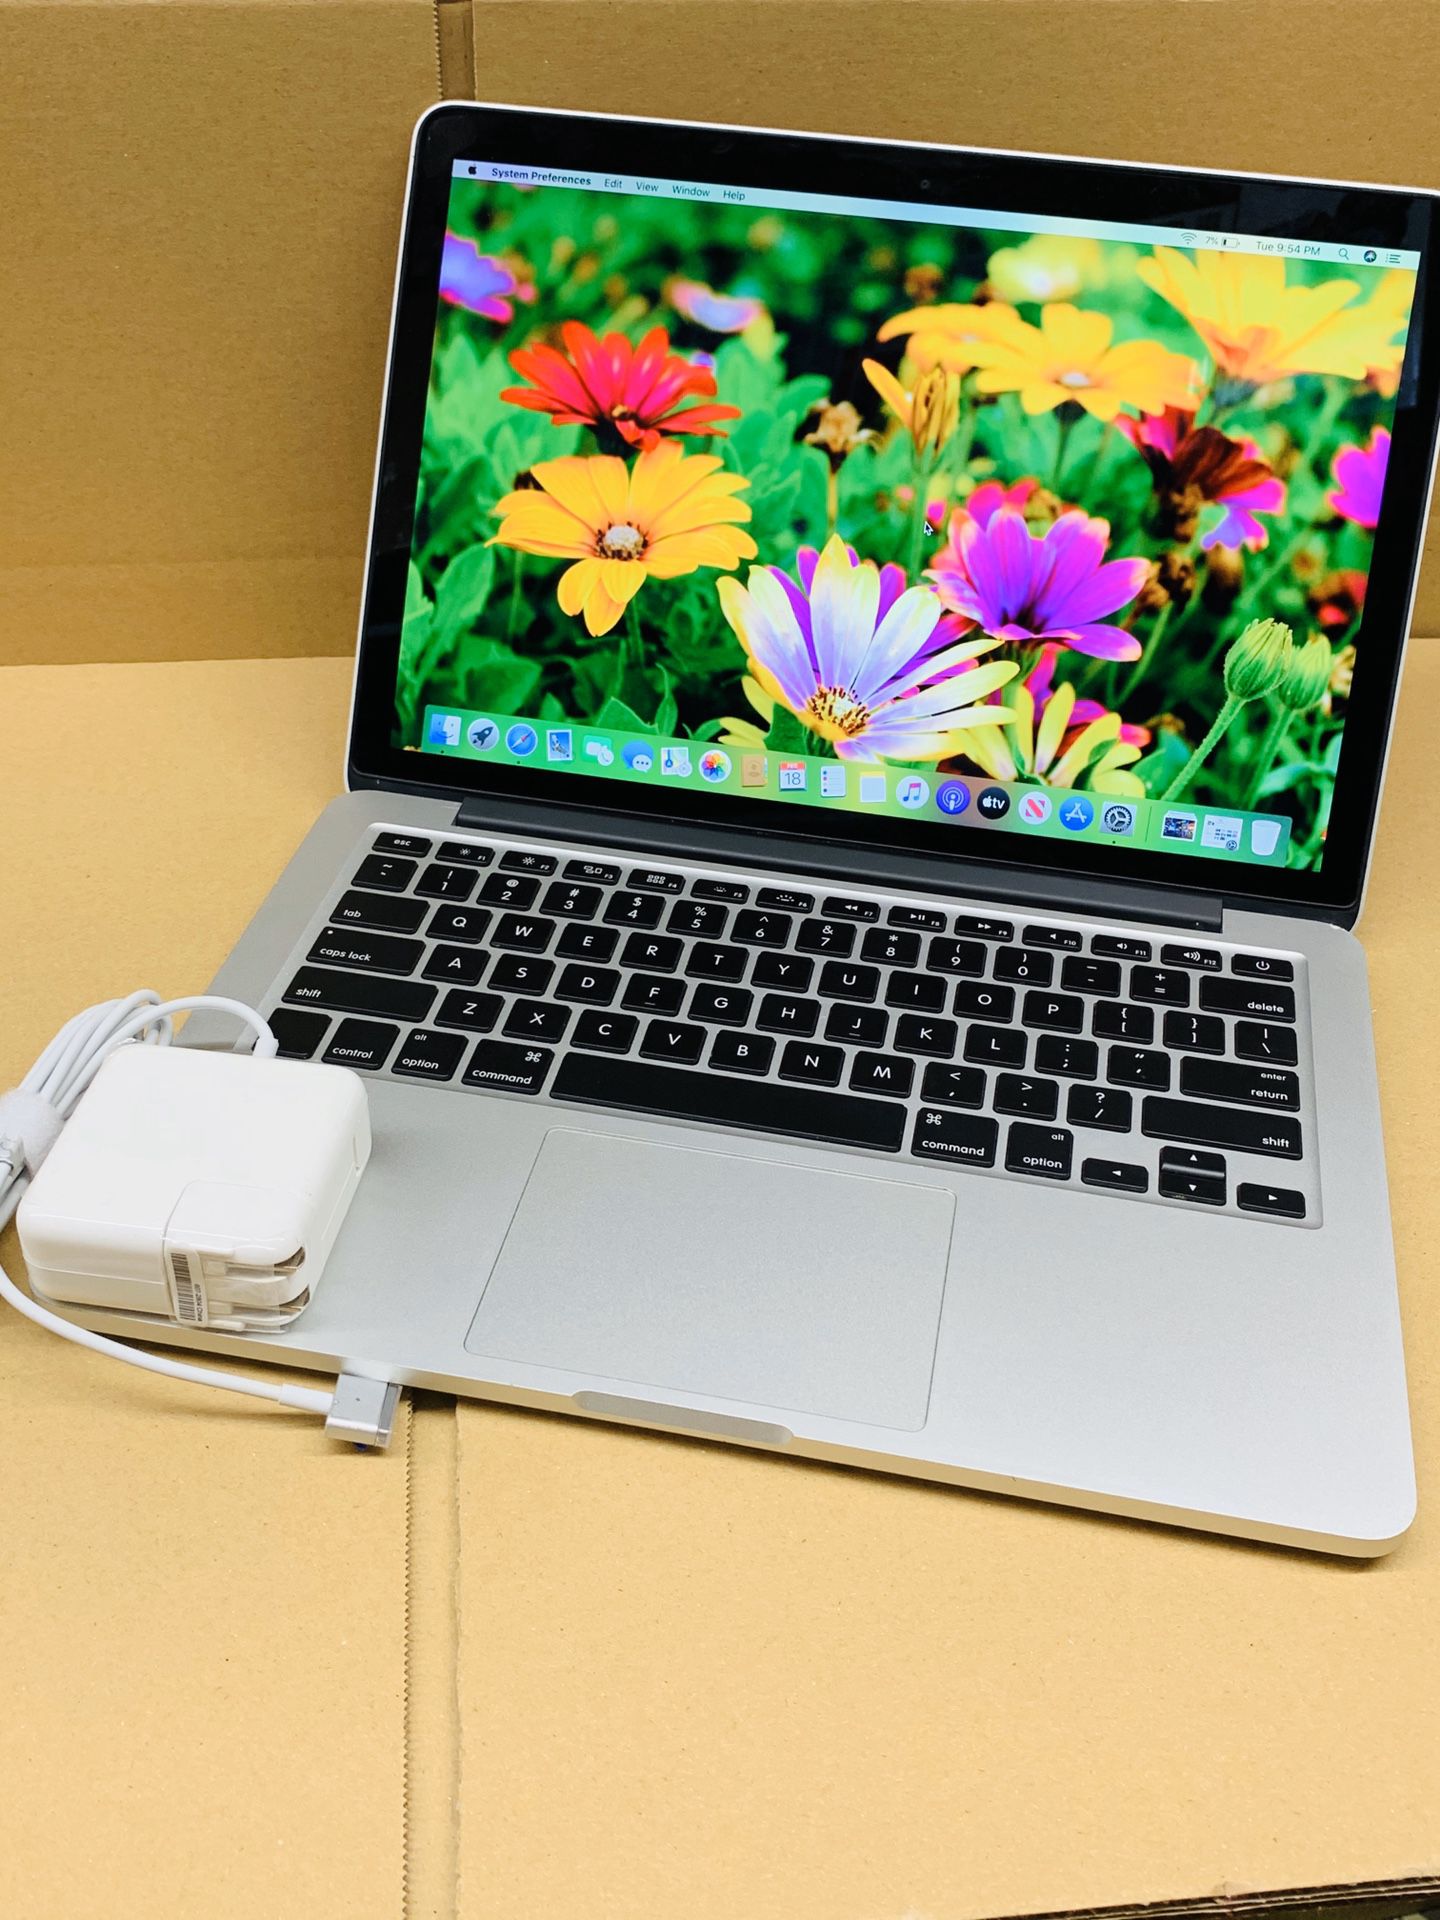 Apple MacBook Pro Retina Core i5-4278U Dual-Core 2.6GHz 8GB 128GB SSD 13.3" Notebook (Mid 2014) w/ 12 months warranty